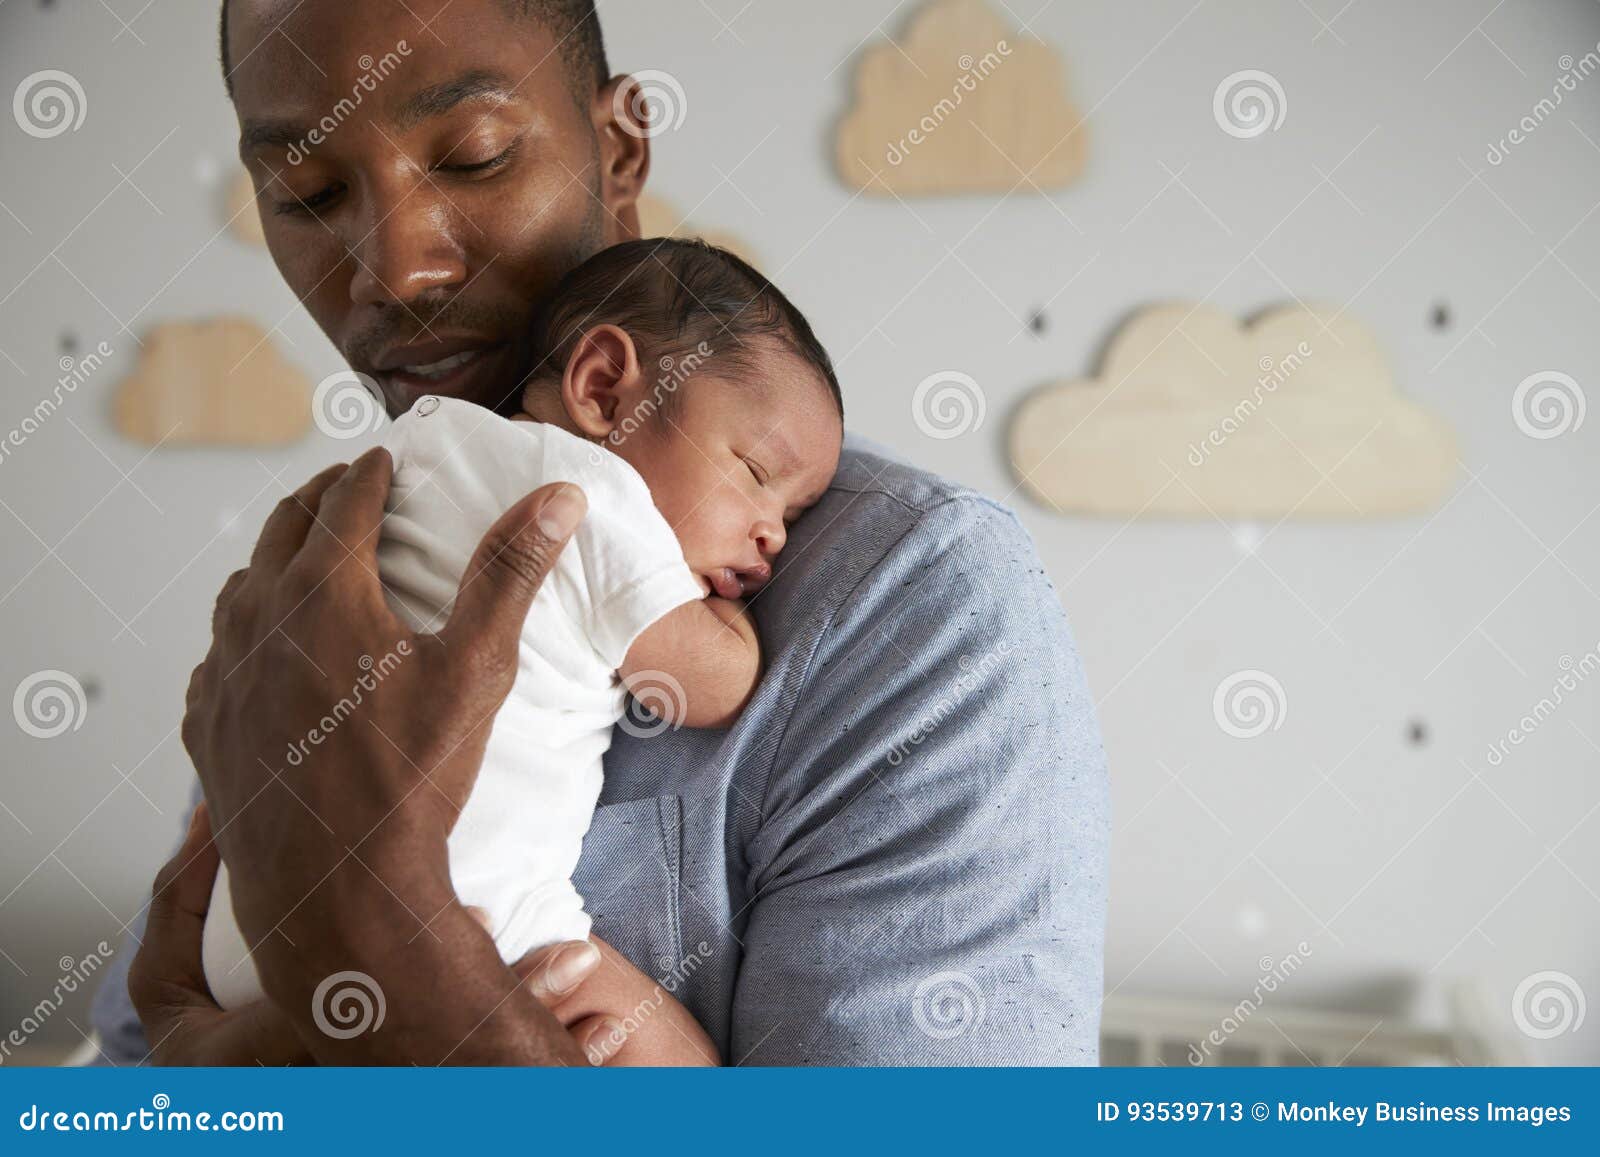 father holding newborn baby son in nursery